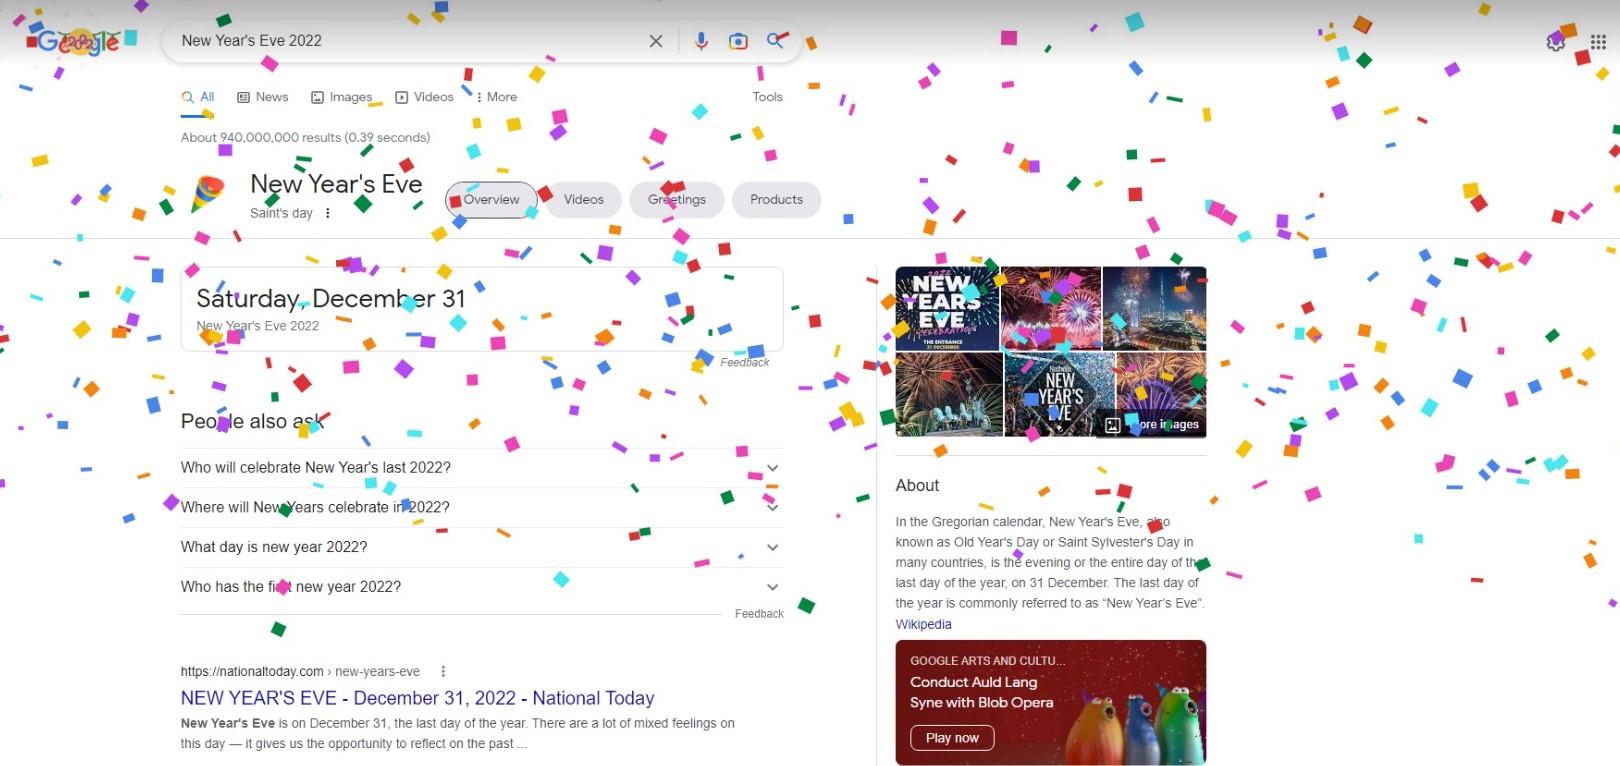 Pojavljuju se konfeti nakon klika na "Google" - Avaz